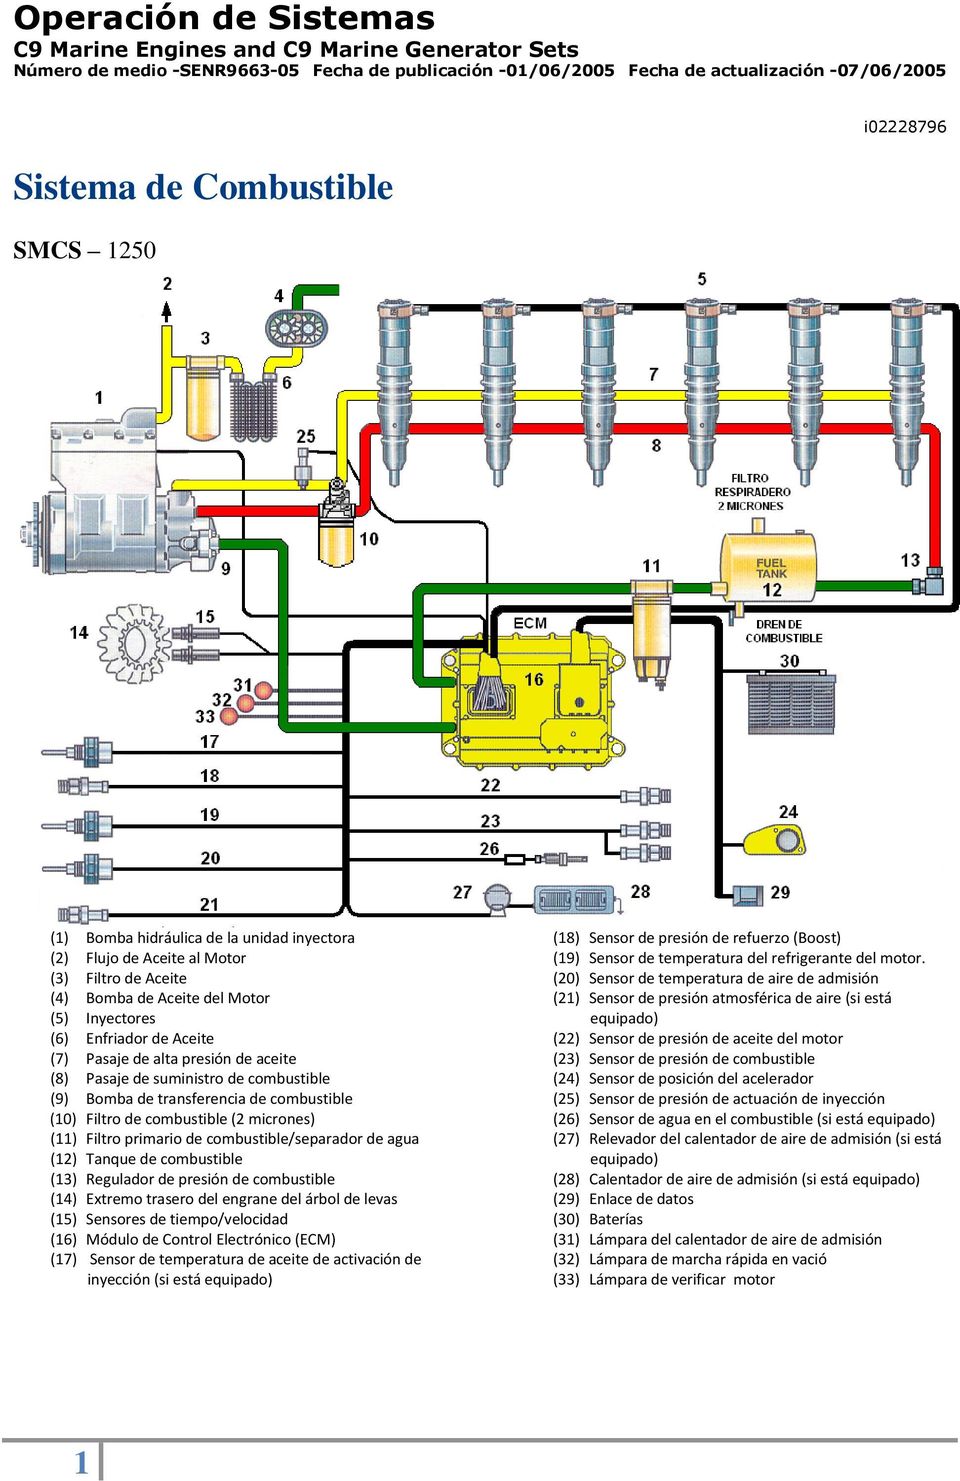 de aceite (8) Pasaje de suministro de combustible (9) Bomba de transferencia de combustible (10) Filtro de combustible (2 micrones) (11) Filtro primario de combustible/separador de agua (12) Tanque